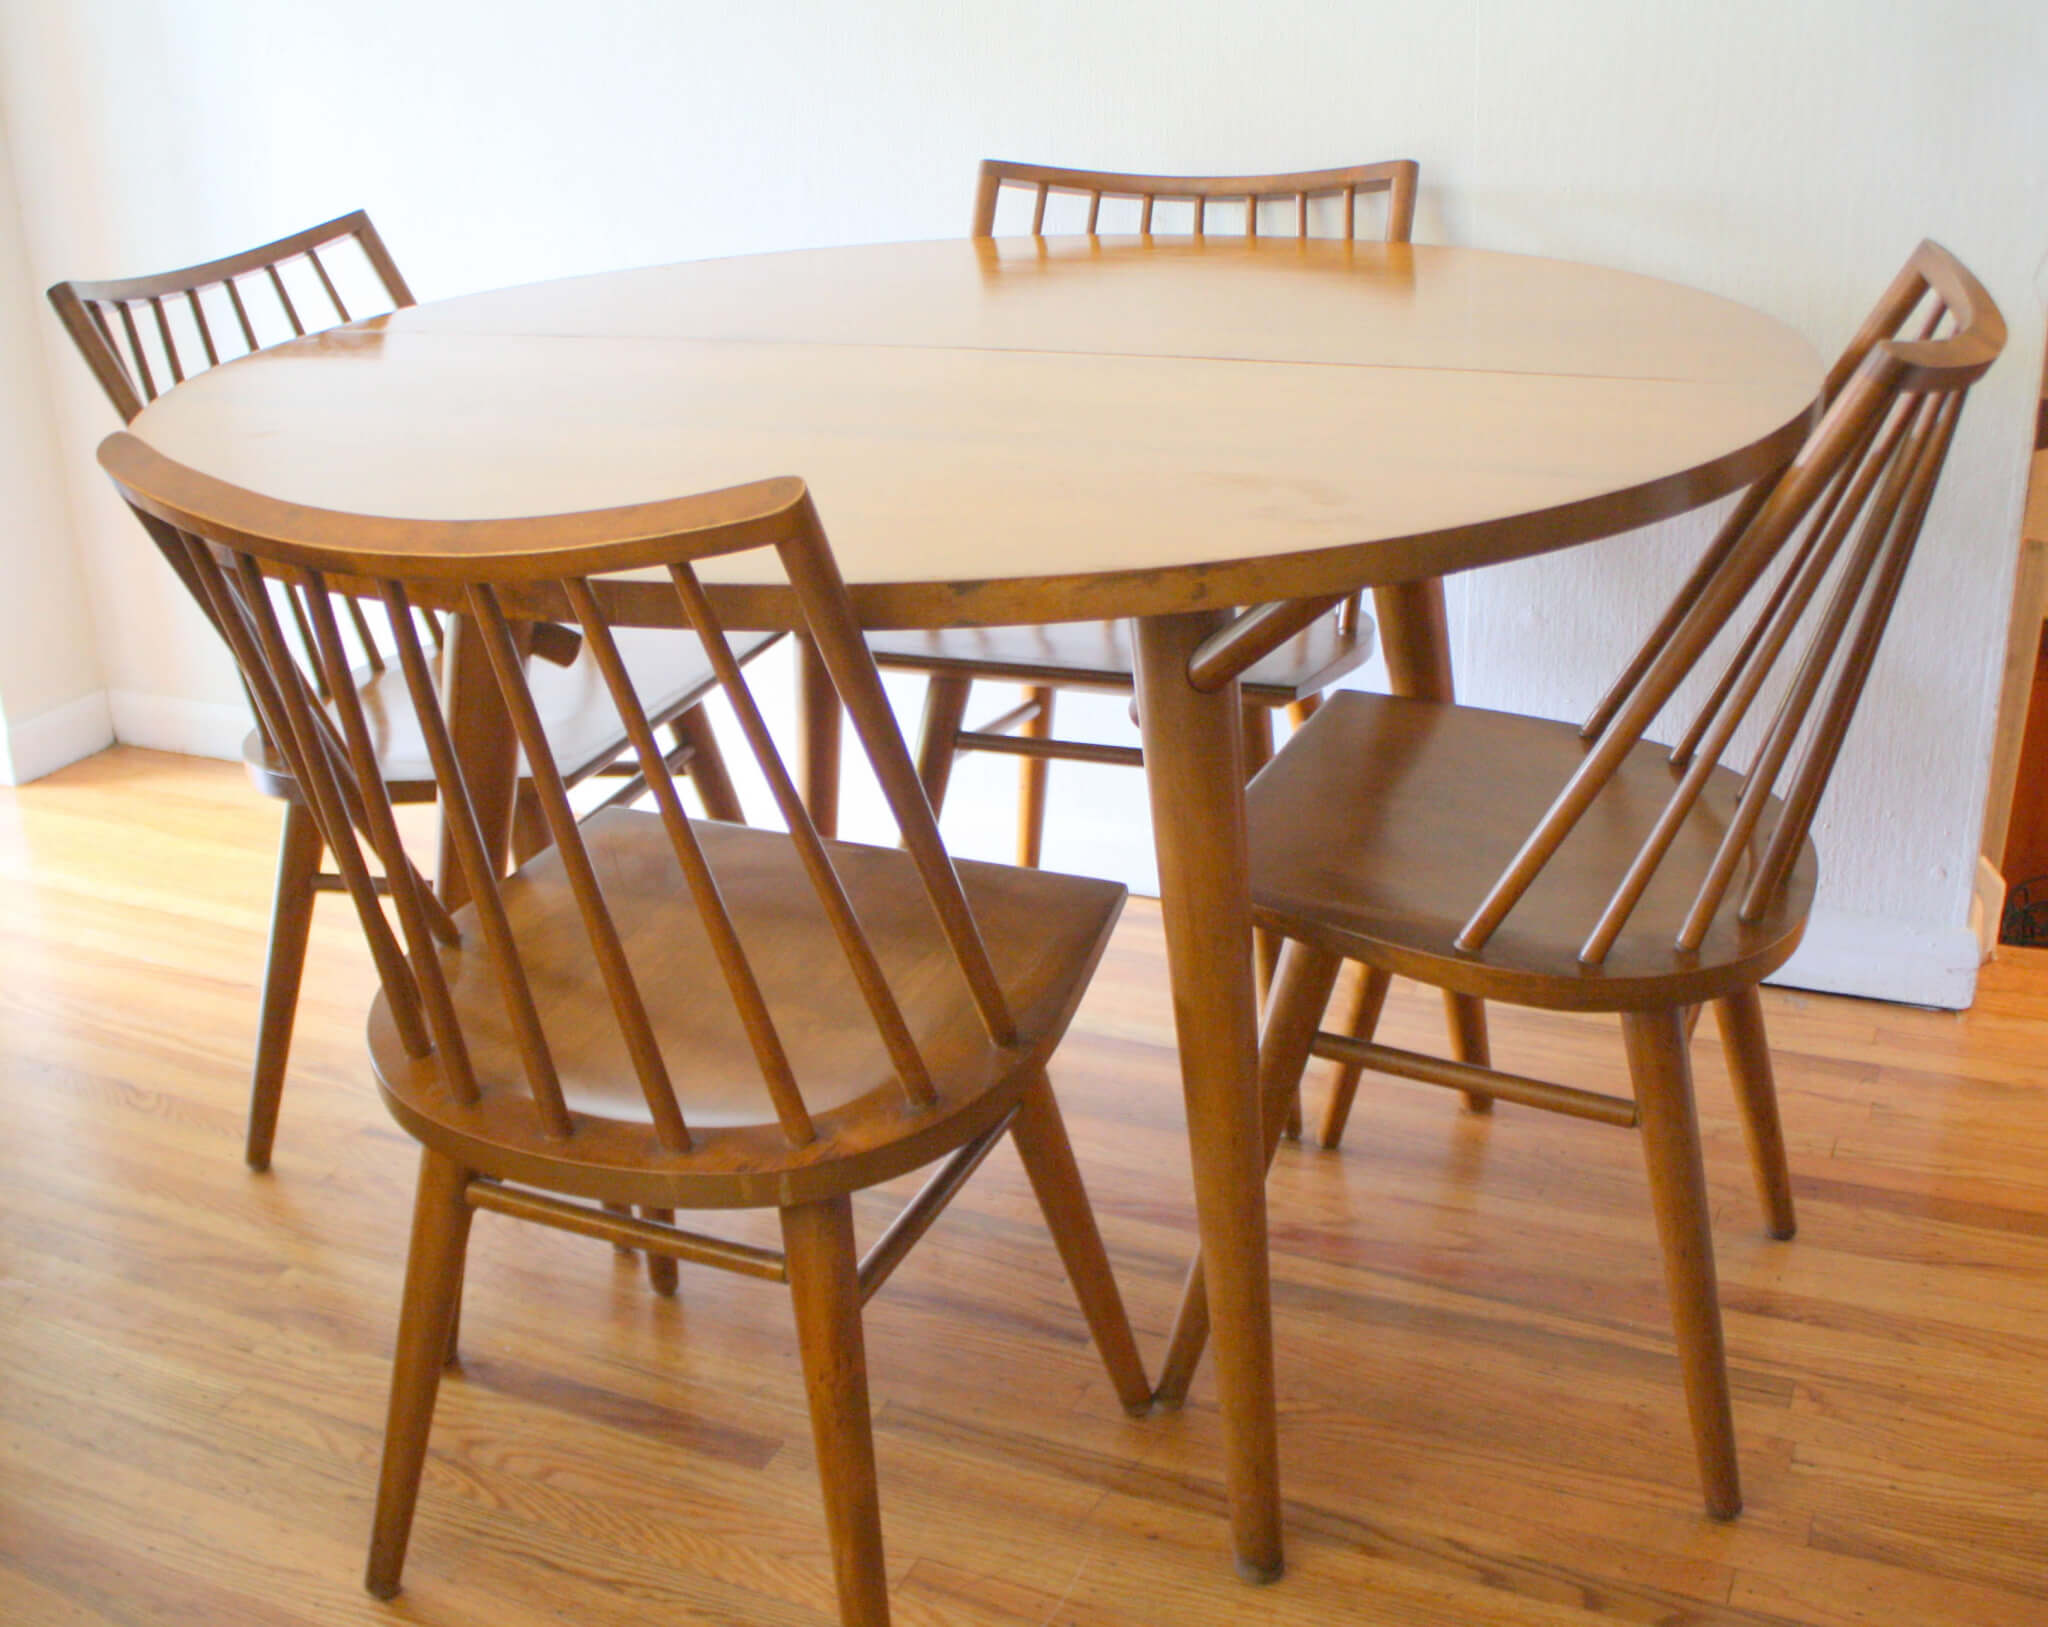 Meja kursi cafe minimalis kayu jati design vintage yang simple dan nyaman